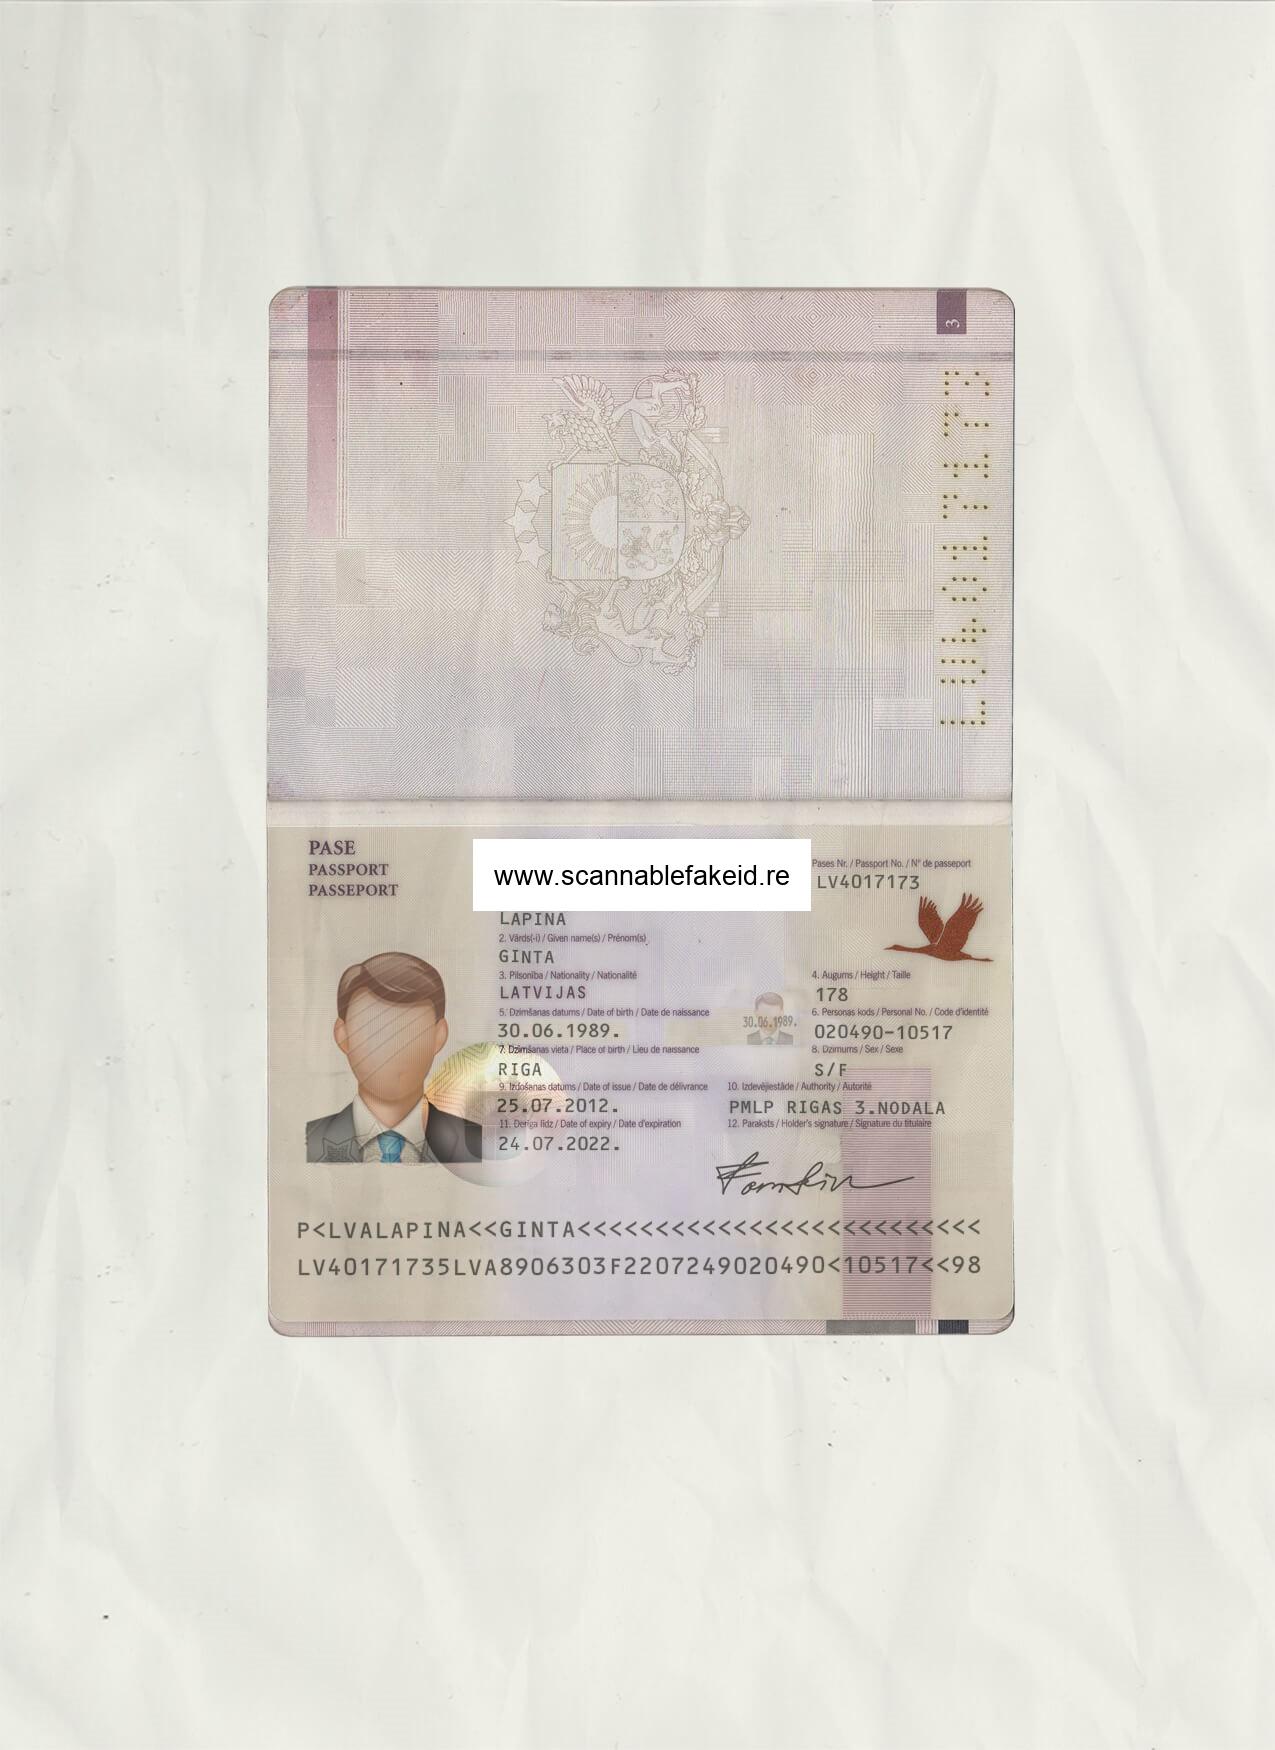 Latvia Fake Passport - Buy Scannable Fake ID Online - Fake Drivers License